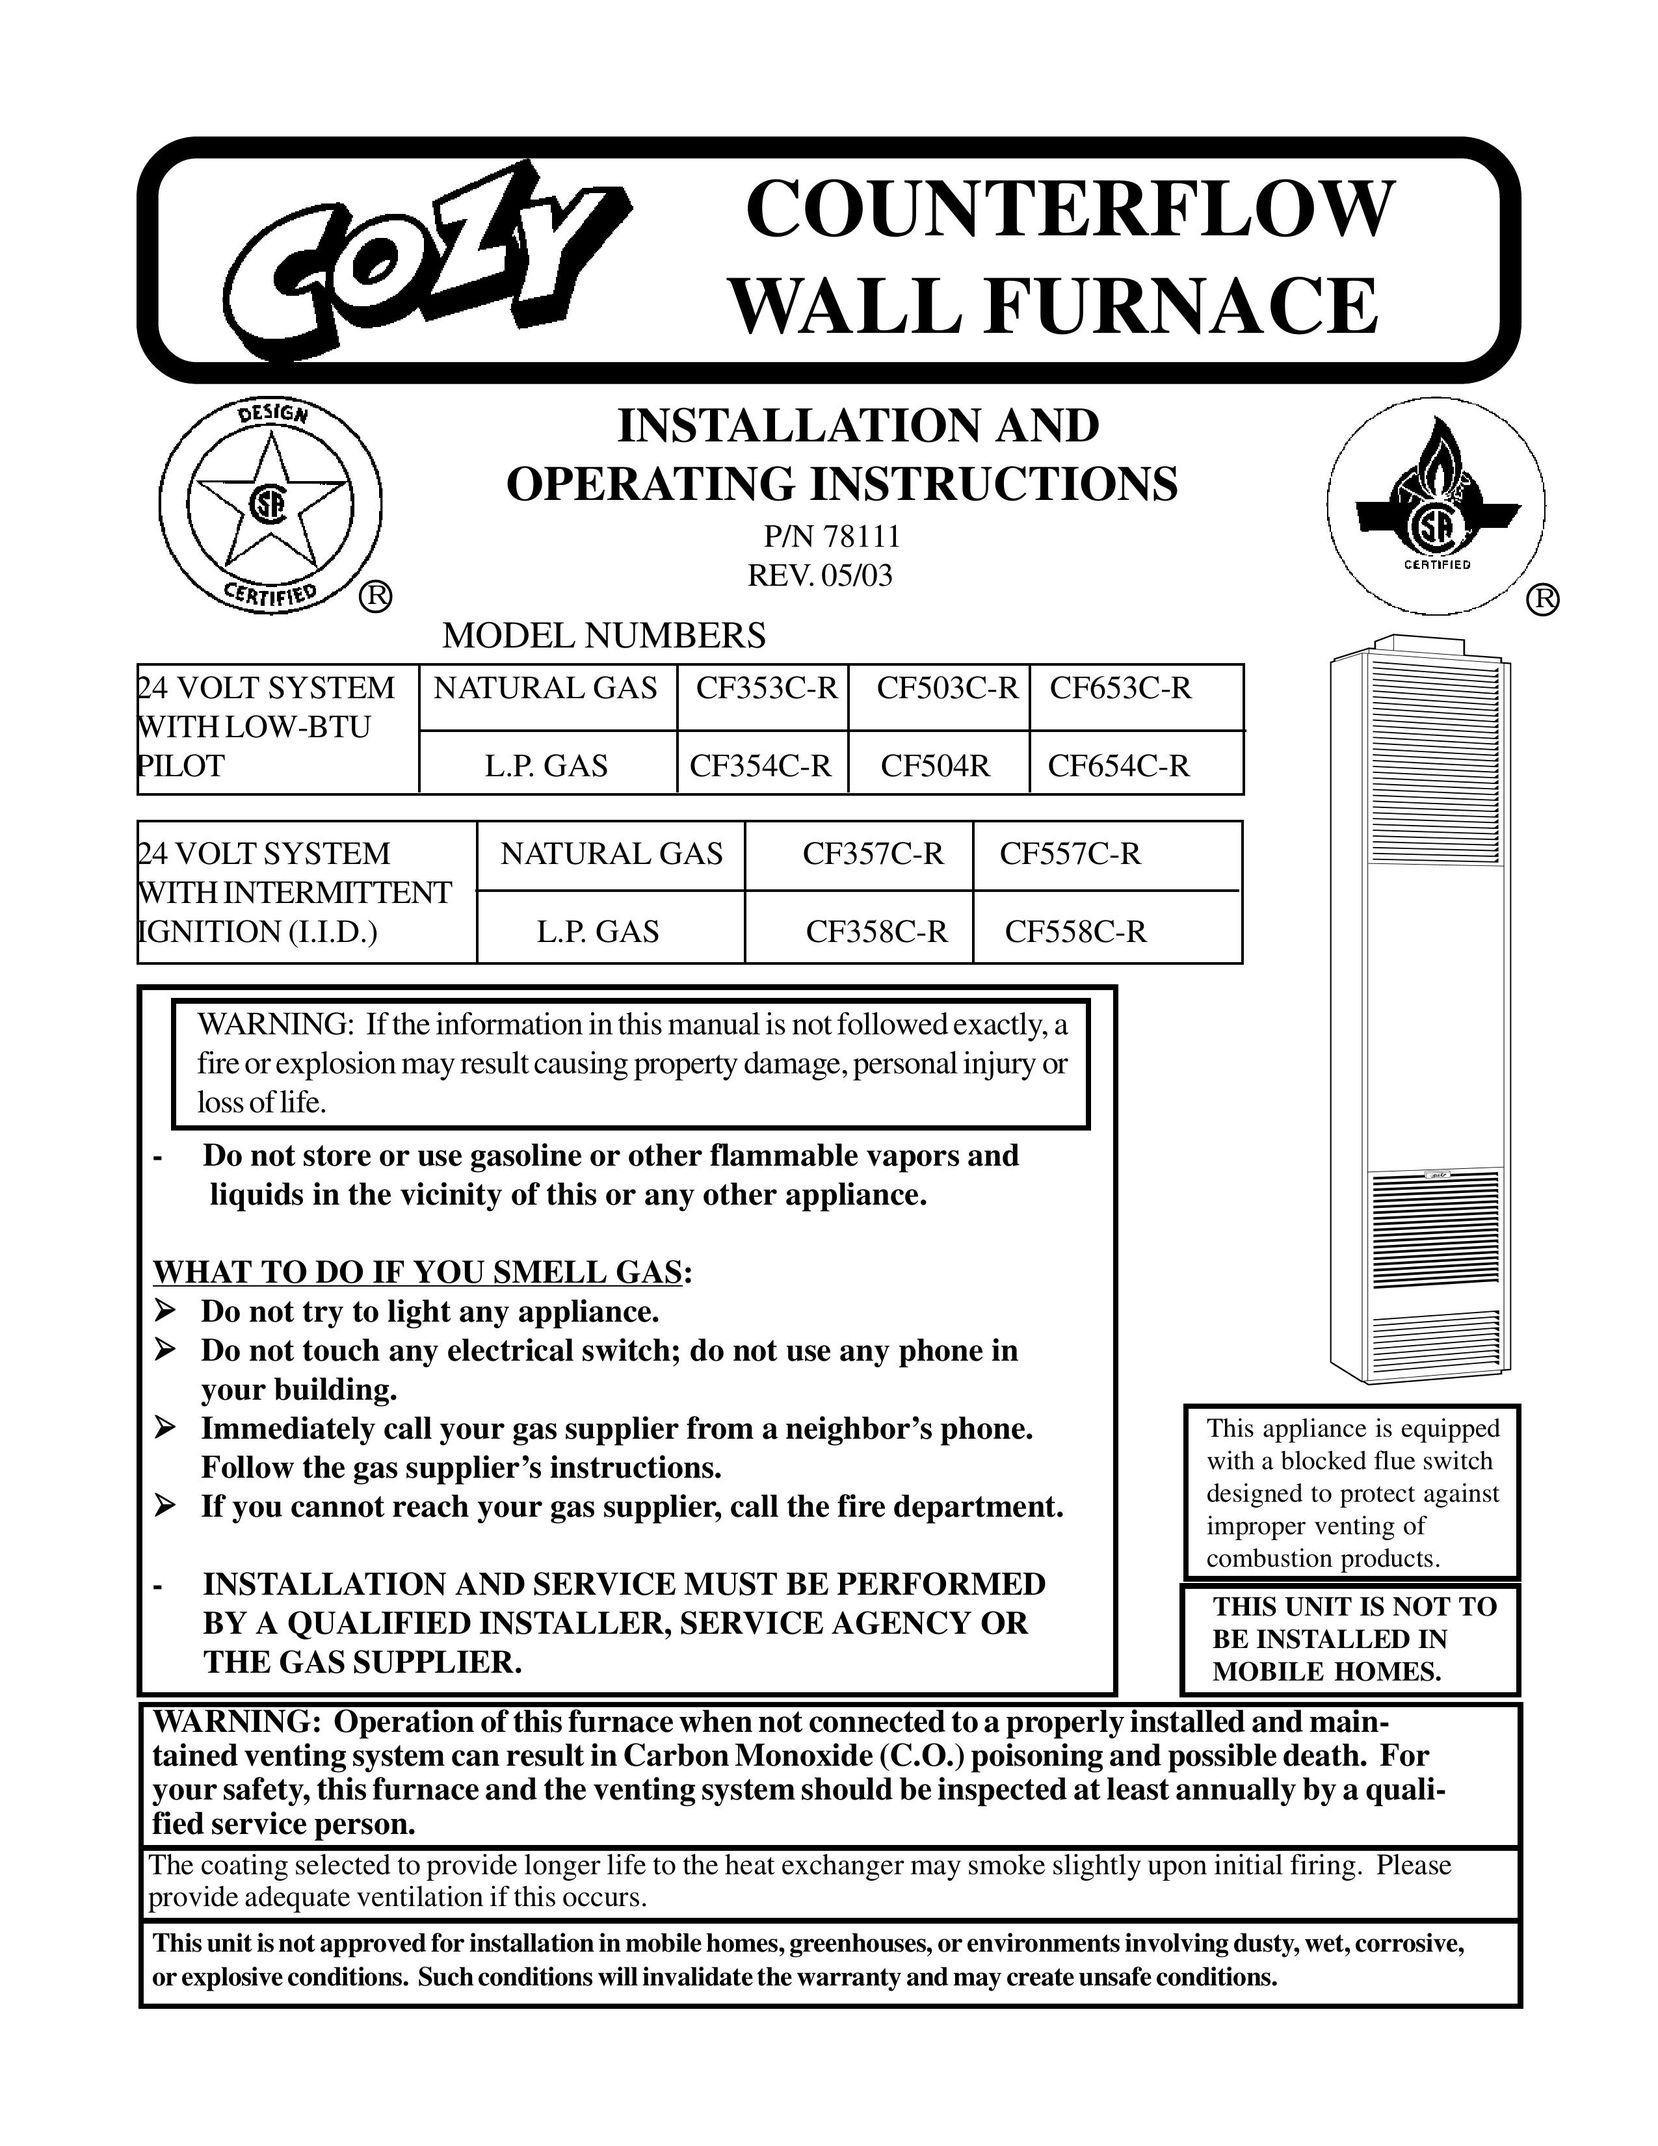 Louisville Tin and Stove CF504R Furnace User Manual